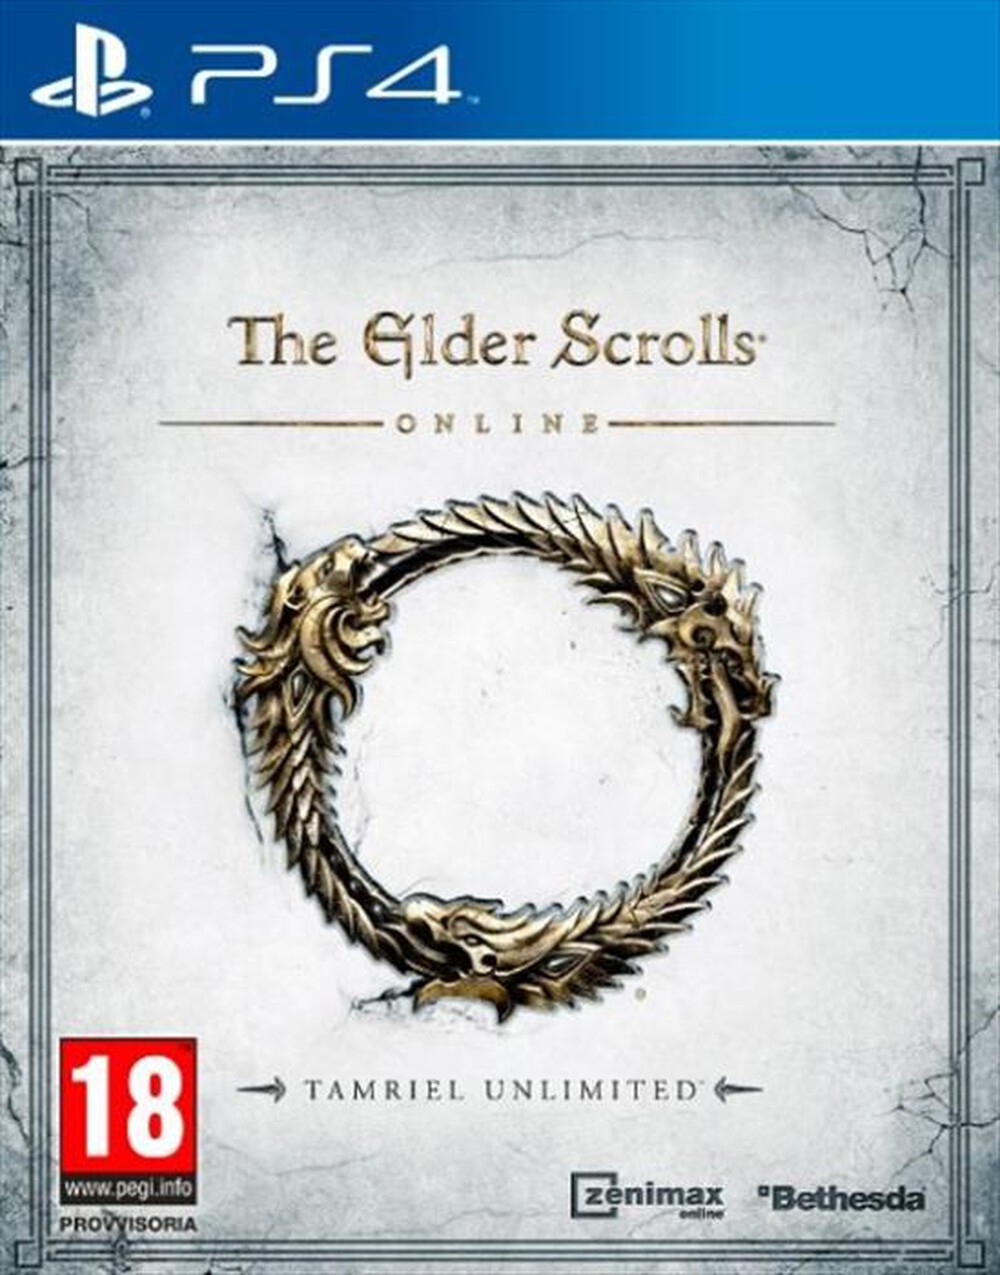 "KOCH MEDIA - The Elder Scrolls Online - Tamriel Unlimited Ps4"